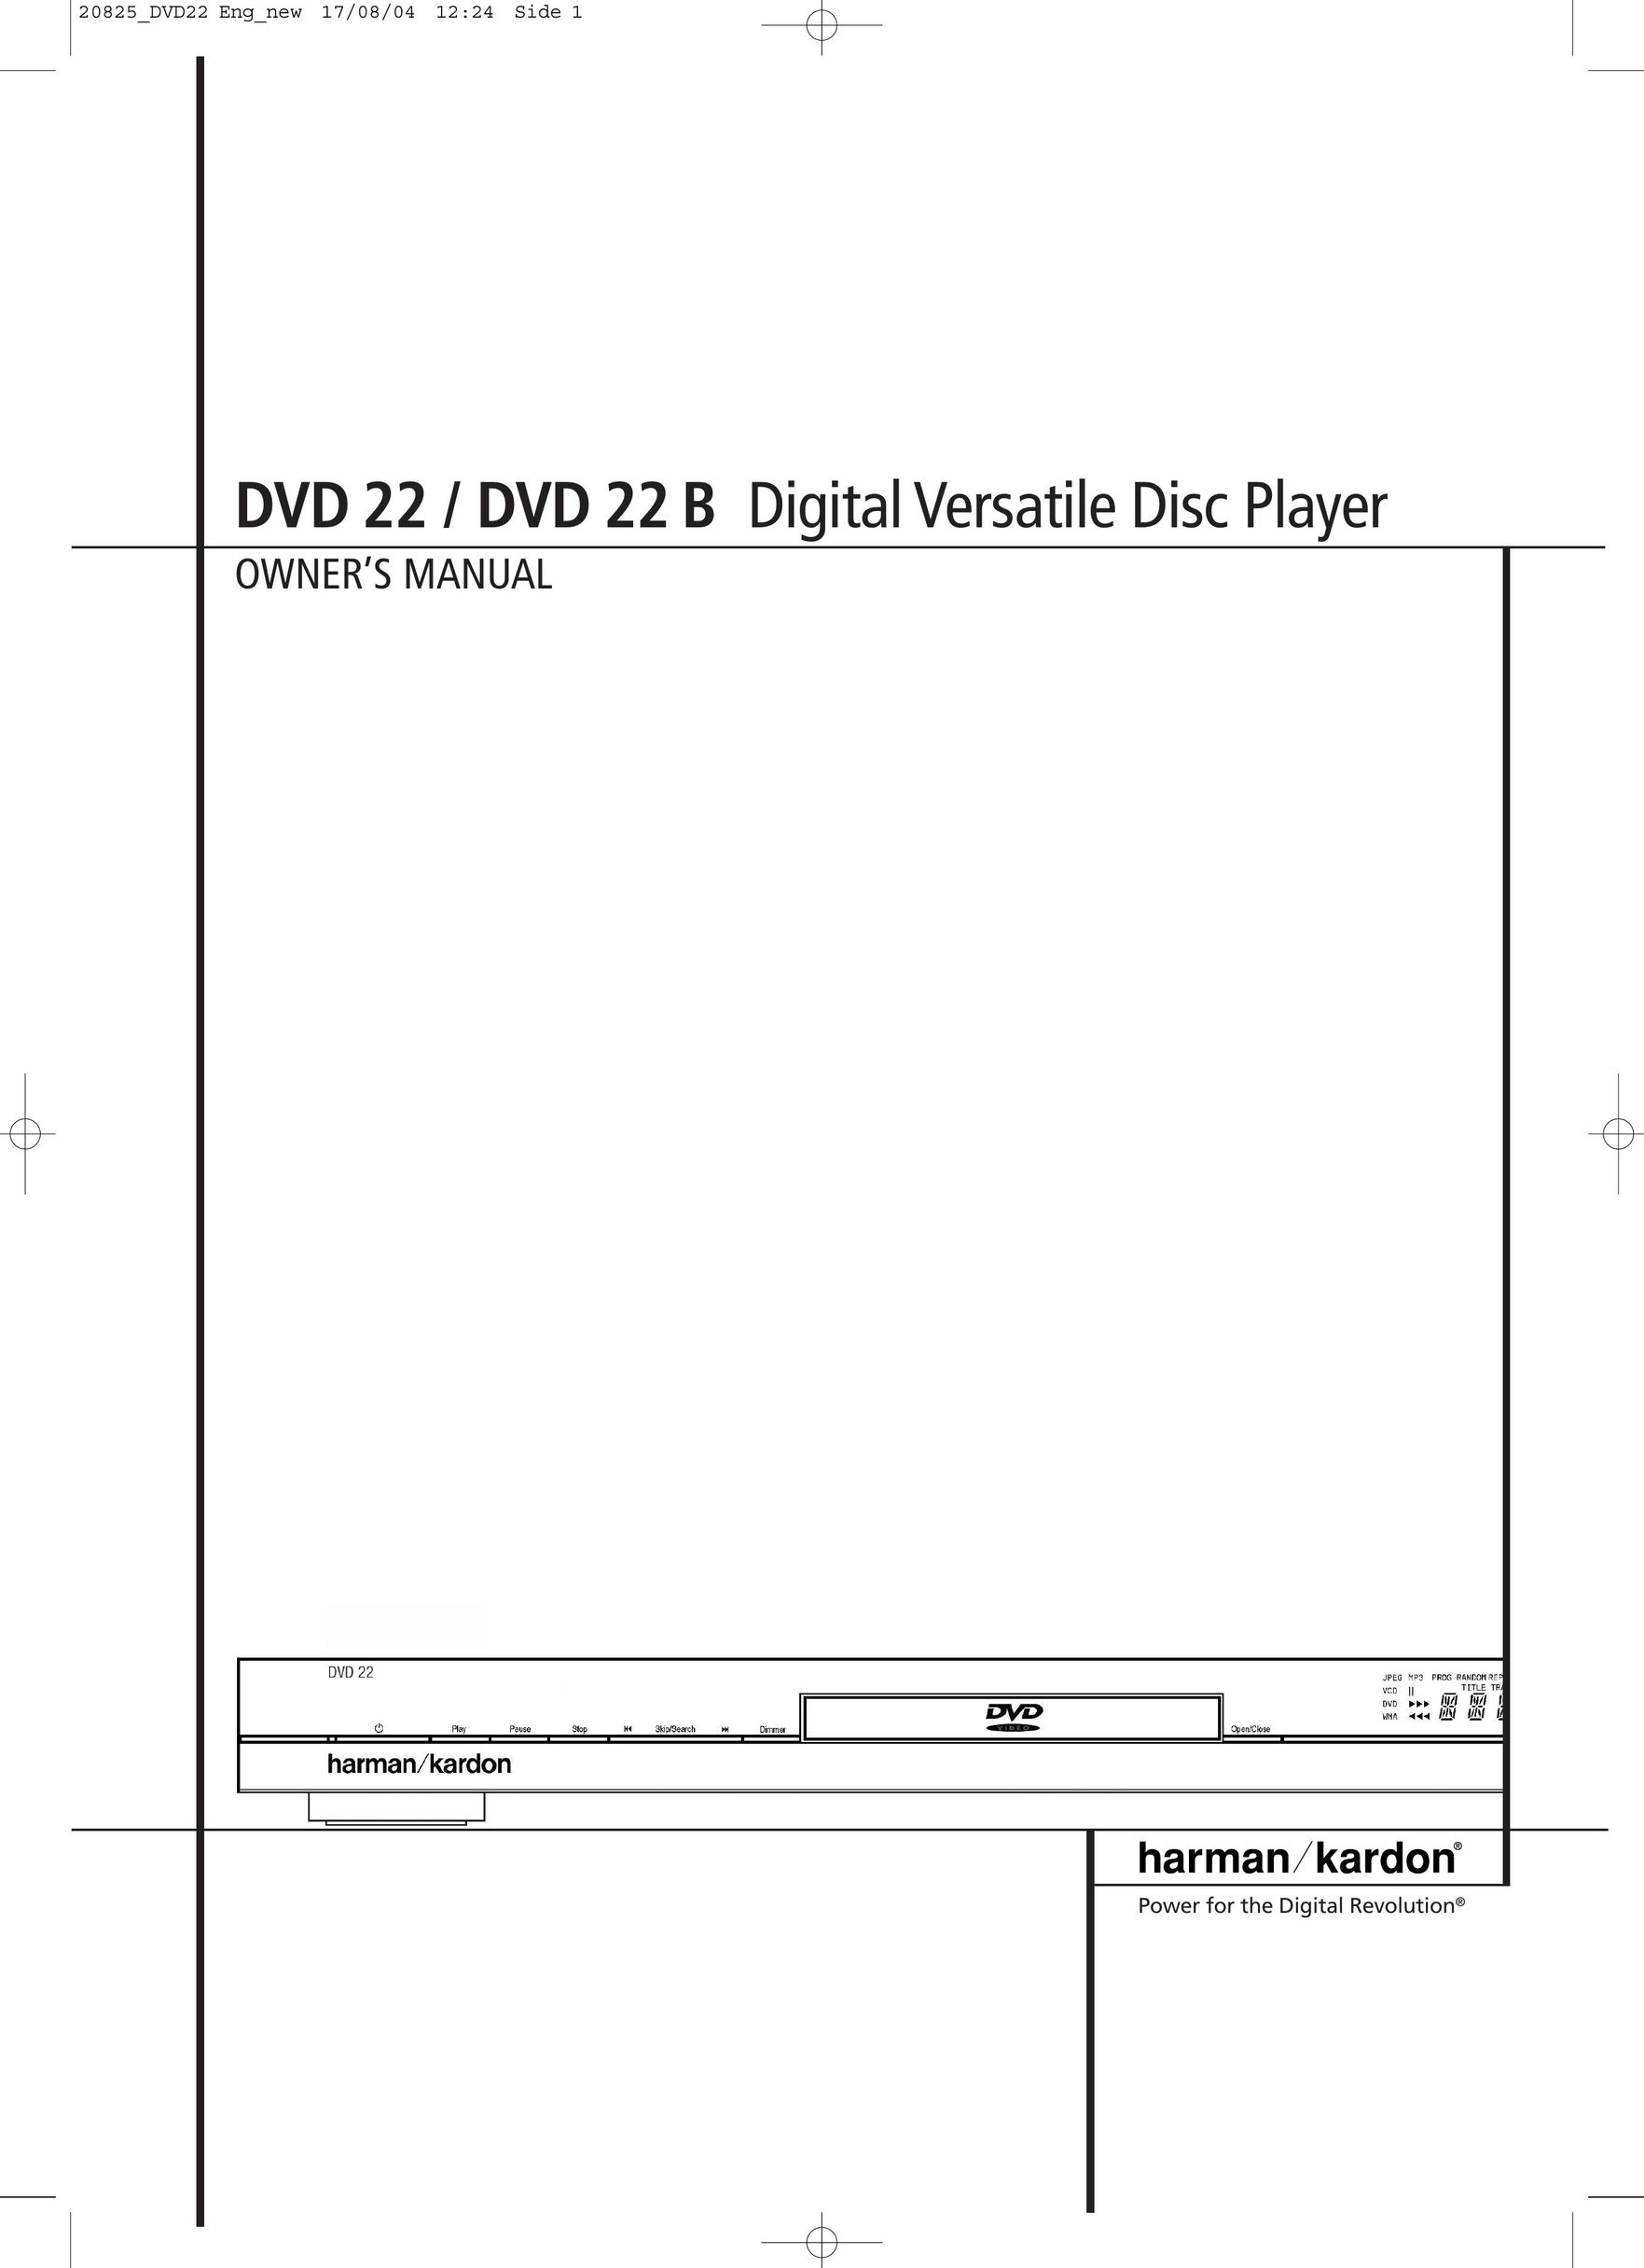 Harman-Kardon DVD22B DVD Player User Manual